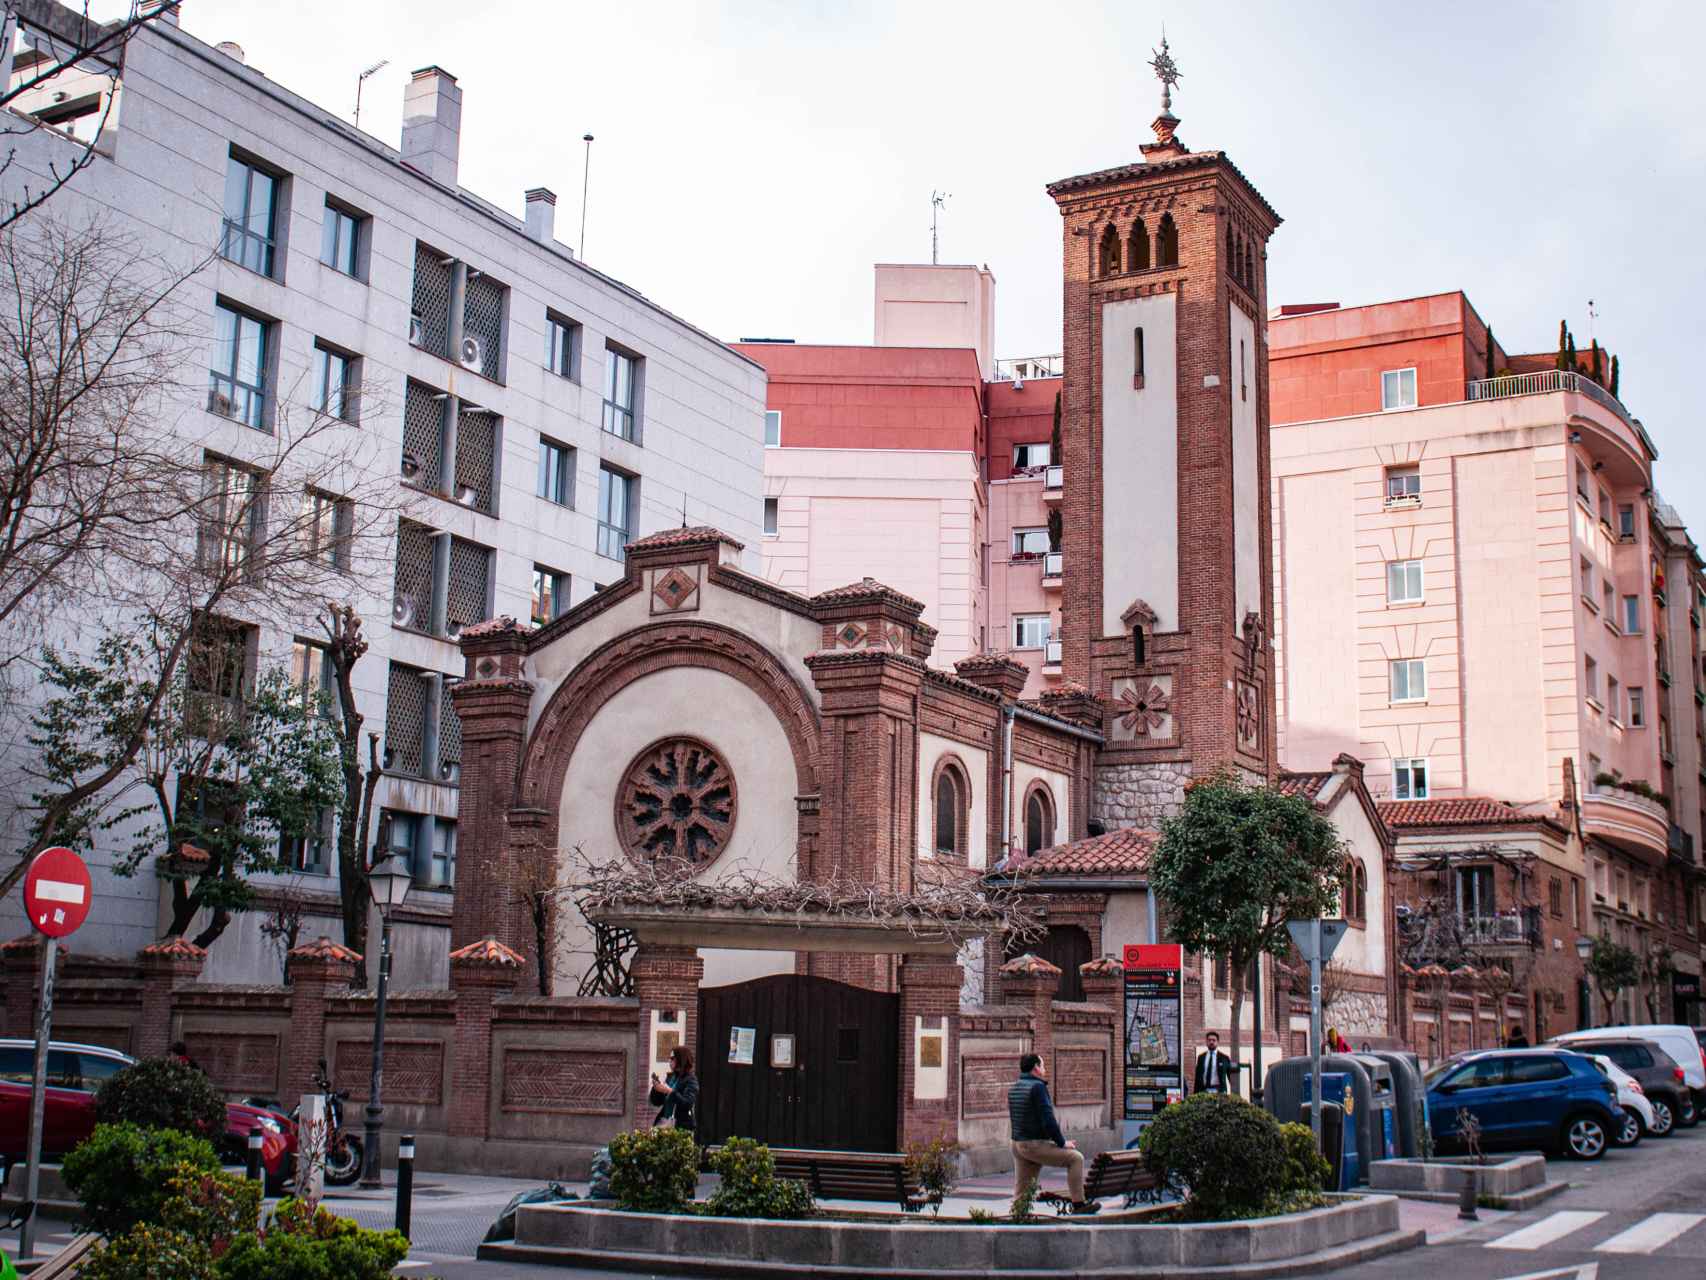 La iglesia de San Jorge, un templo anglicano en la calle Núñez de Balboa (Madrid).